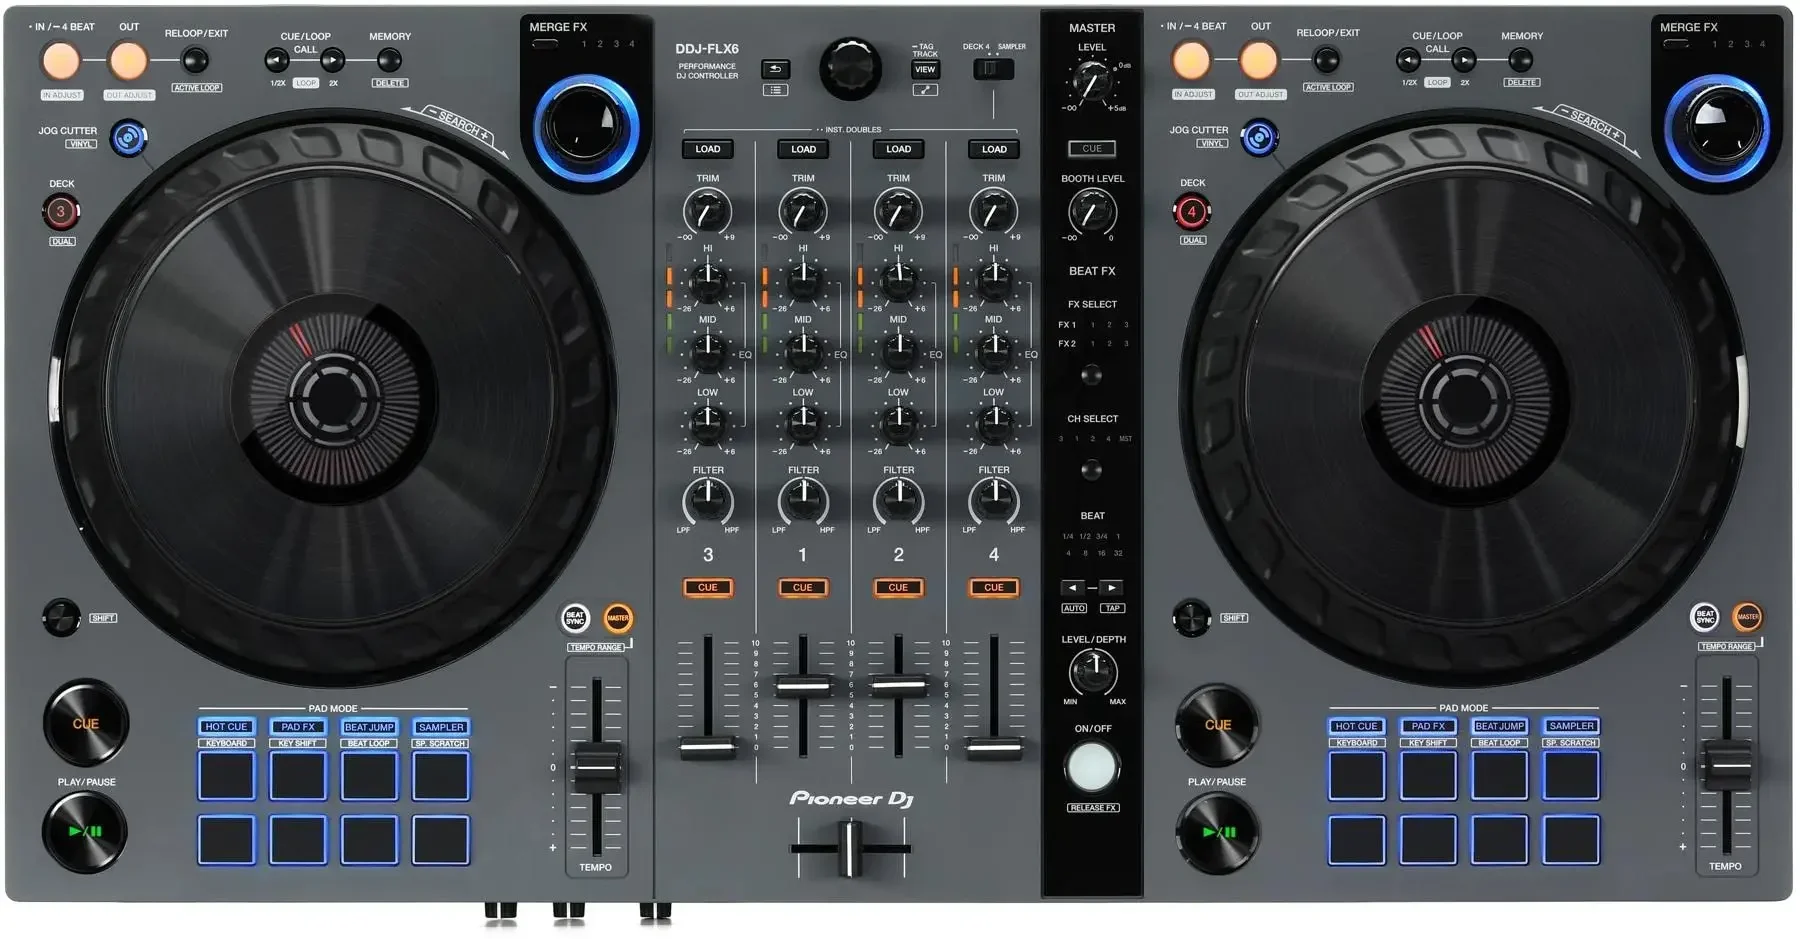 

100% AUTHENTIC Pioneers DJ DDJ-FLX6-GT 4-deck Rekordbox and Serato DJ Controller - Graphite